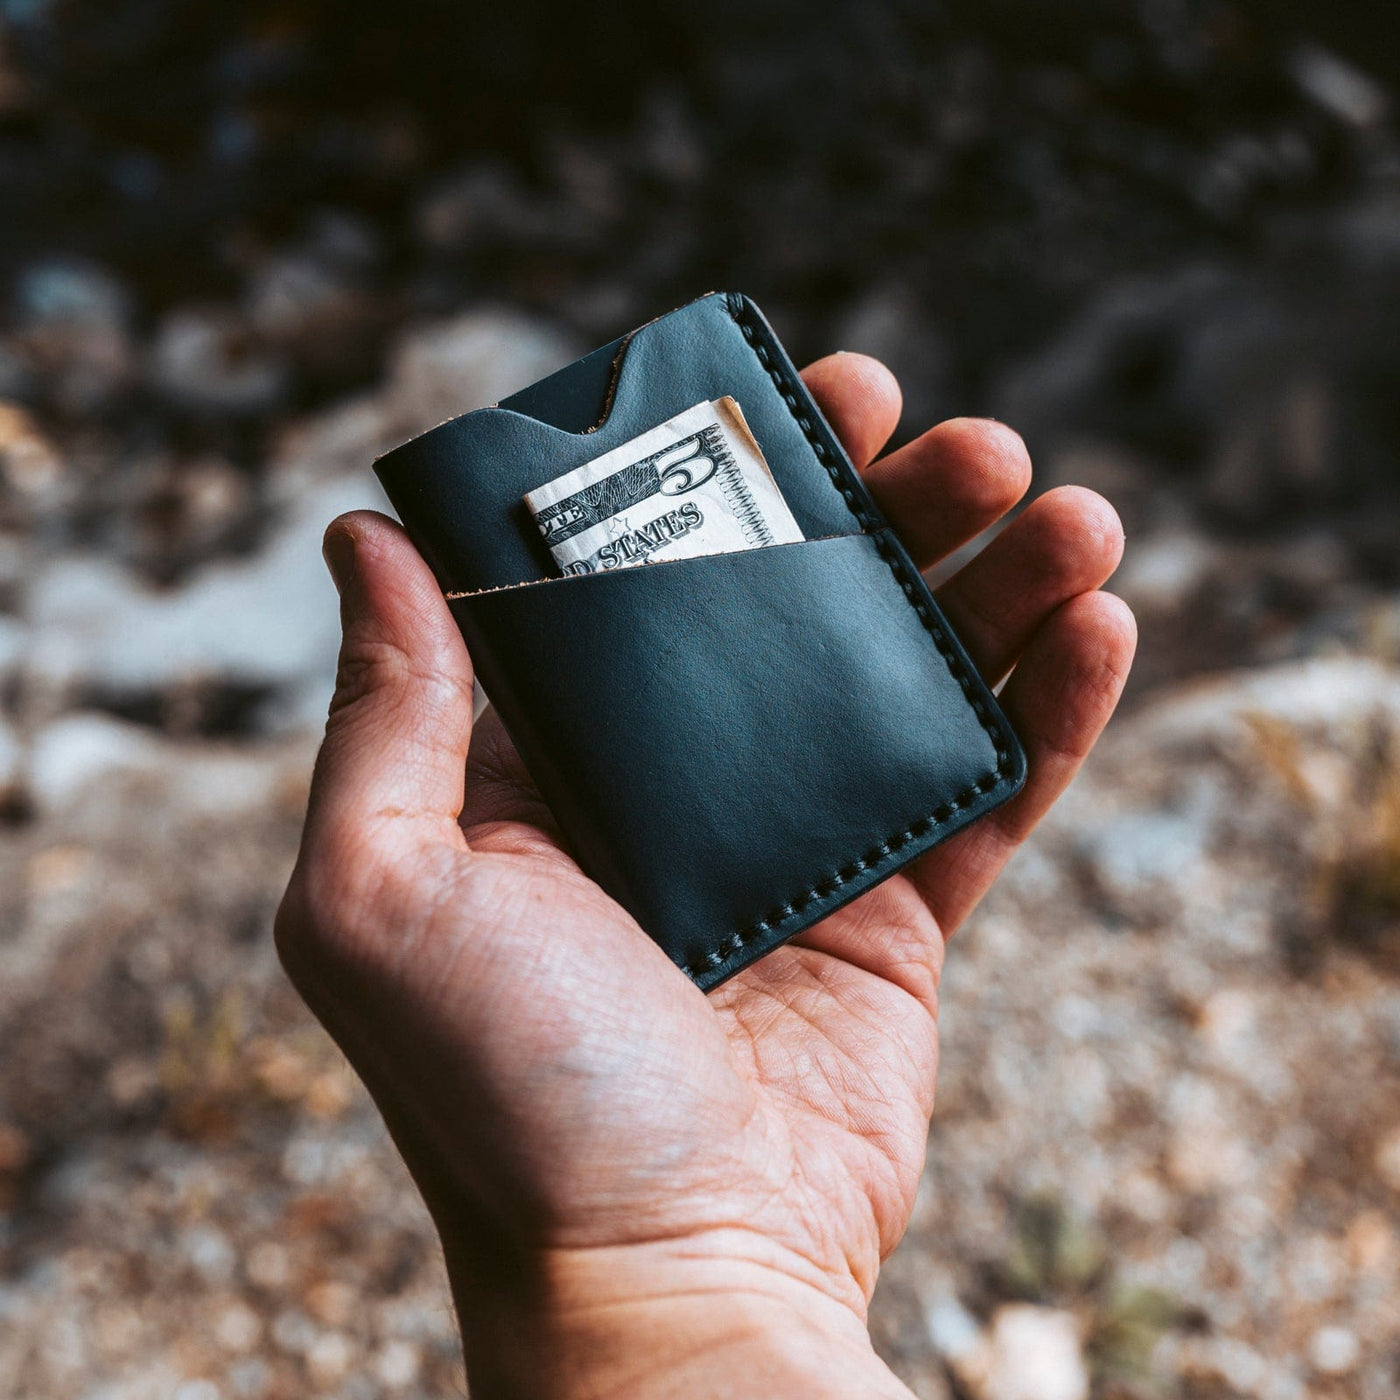 Black Leather 12 Pocket Organizer Wallet #WL110ZK